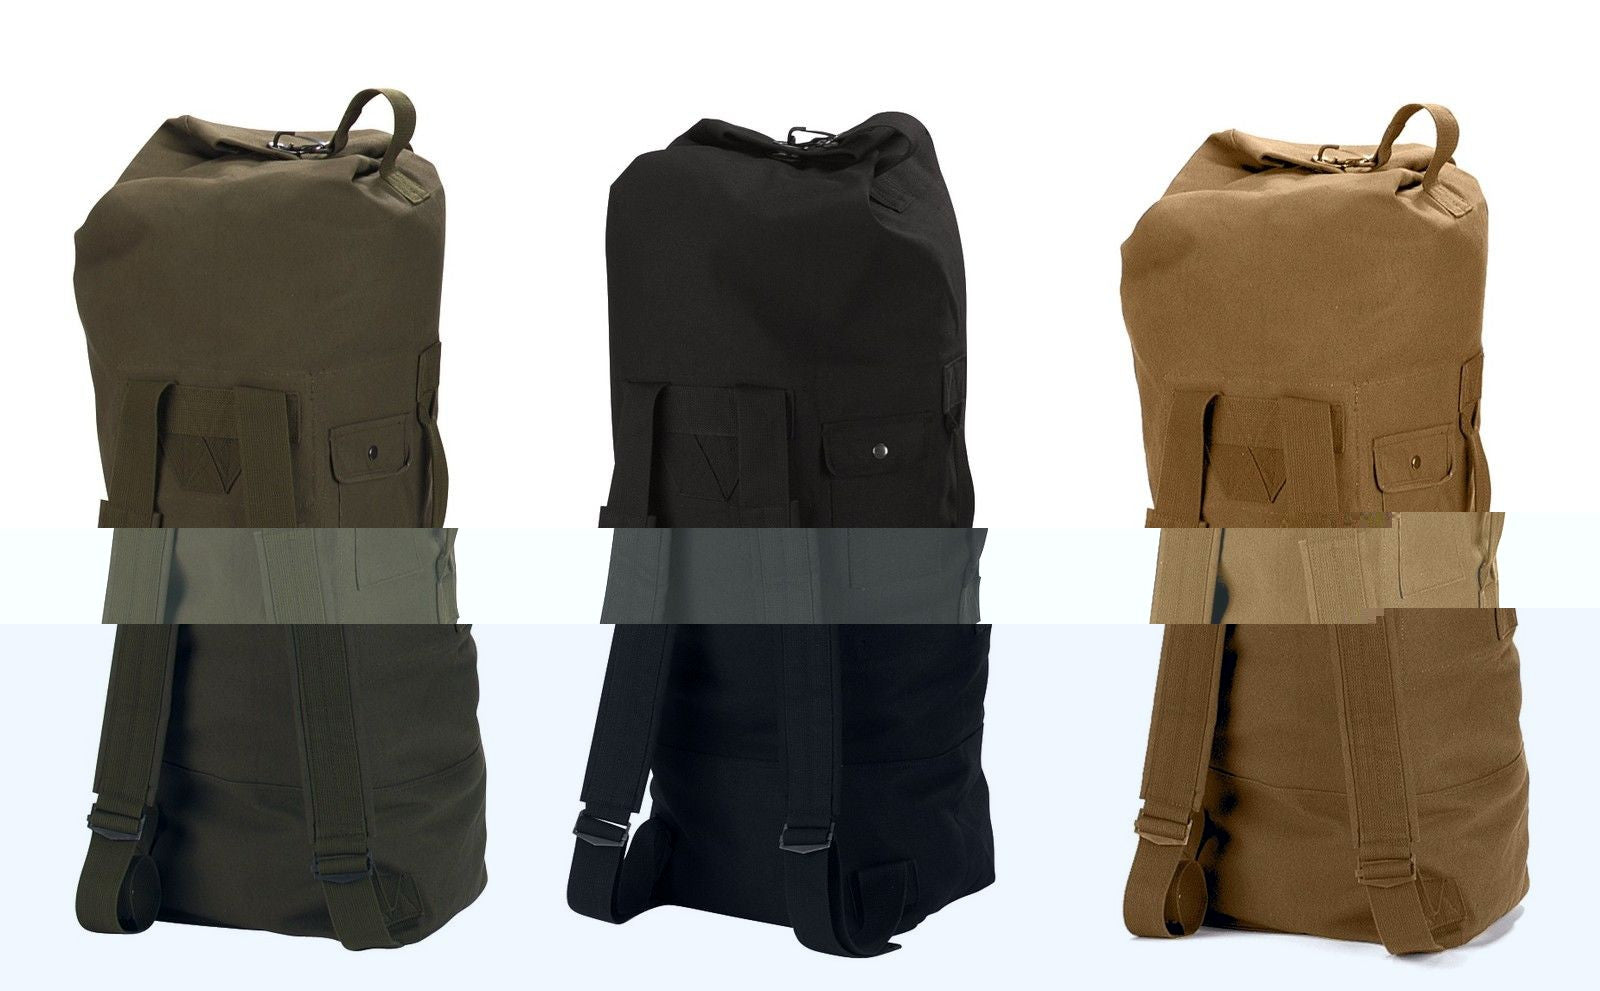 Rothco G.I. Type Enhanced Double Strap Duffle Bag - Black